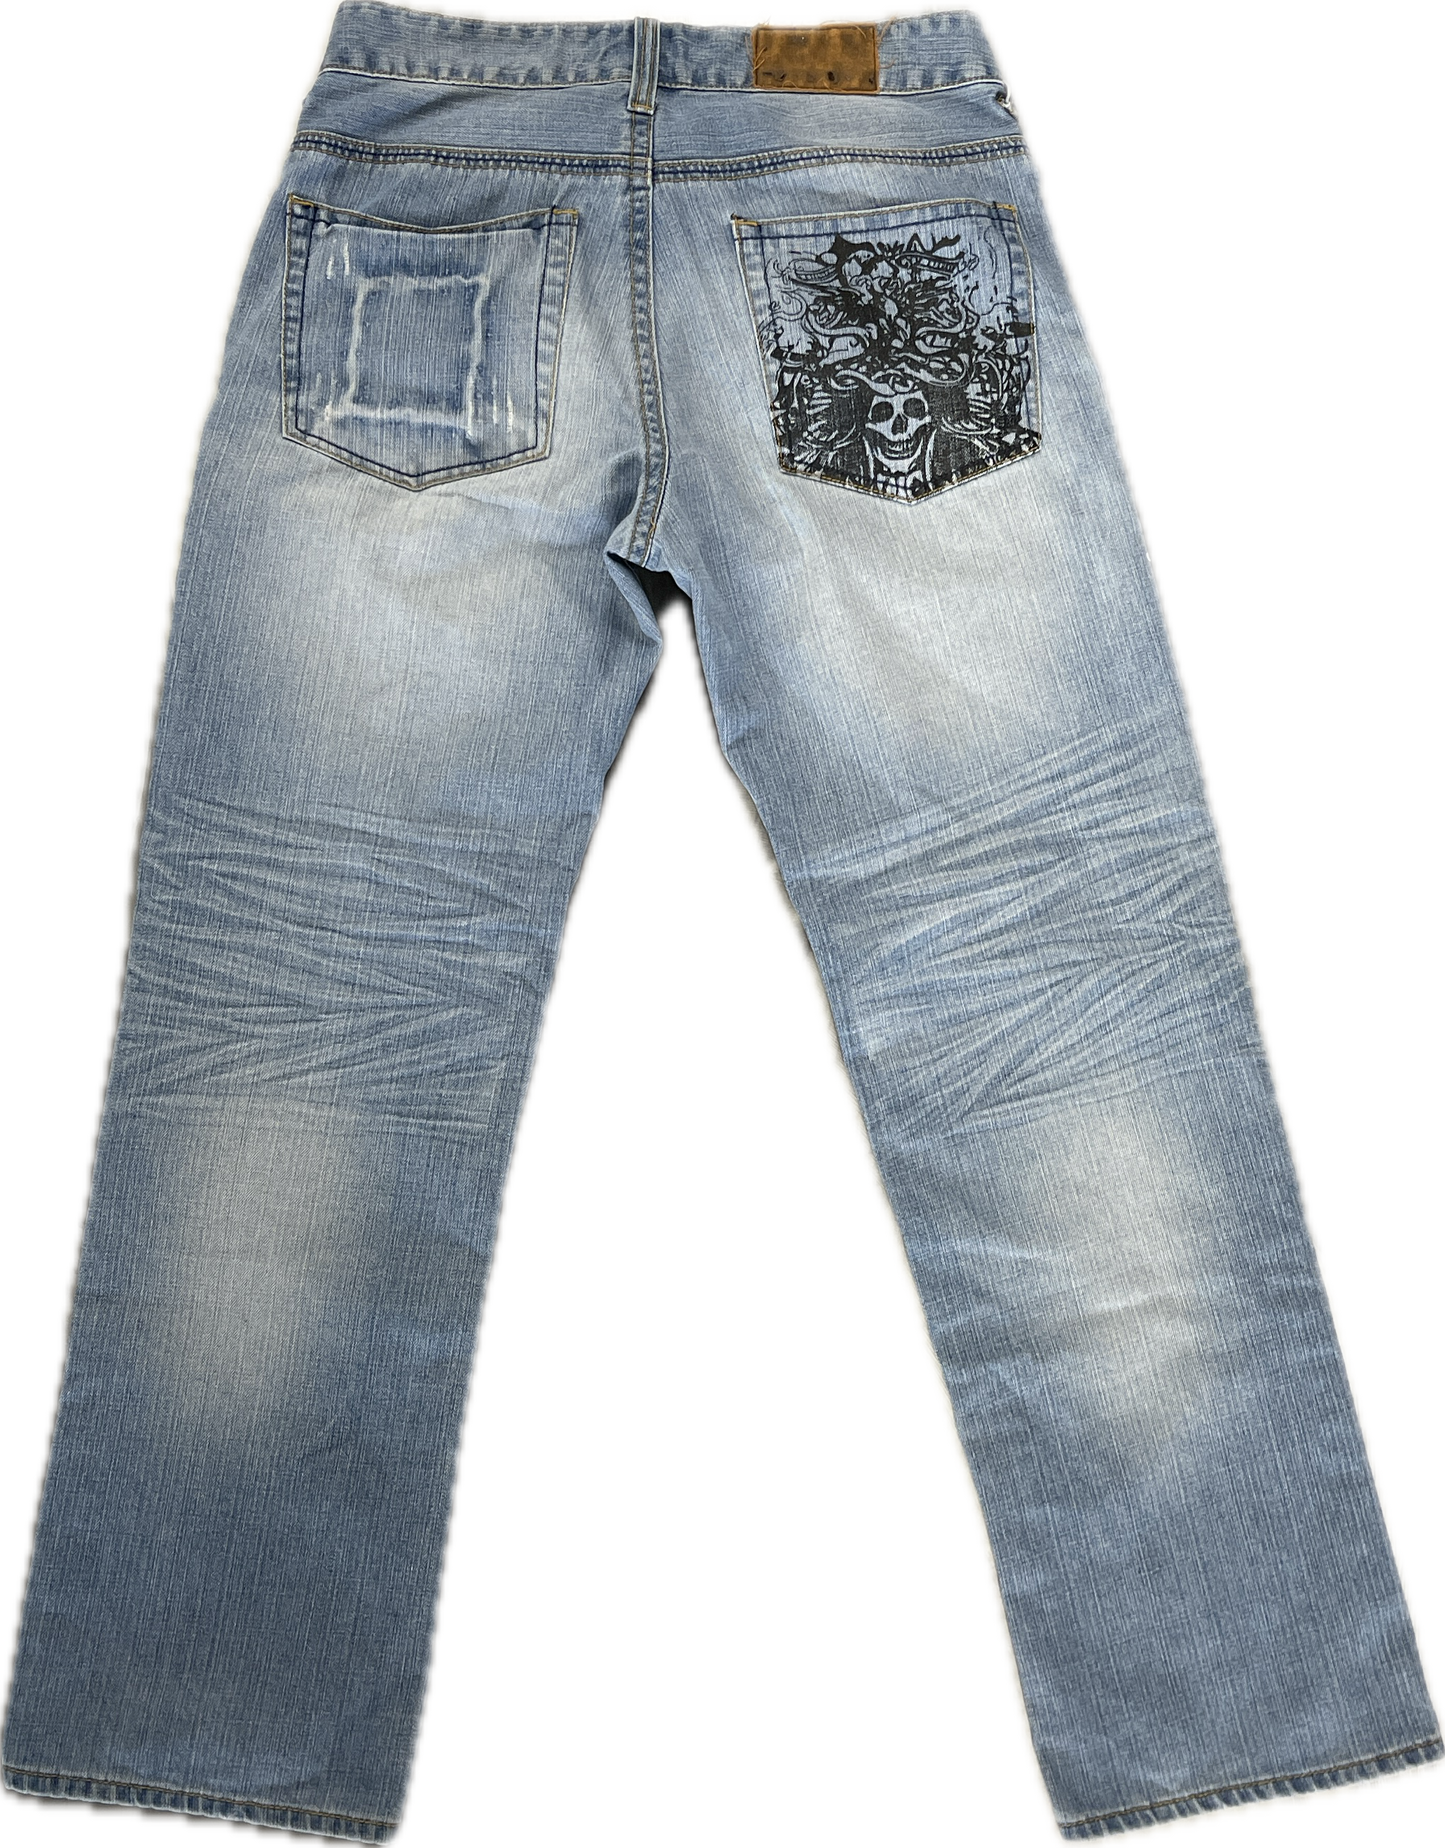 M. Gordon Skull pocket jeans (USED)